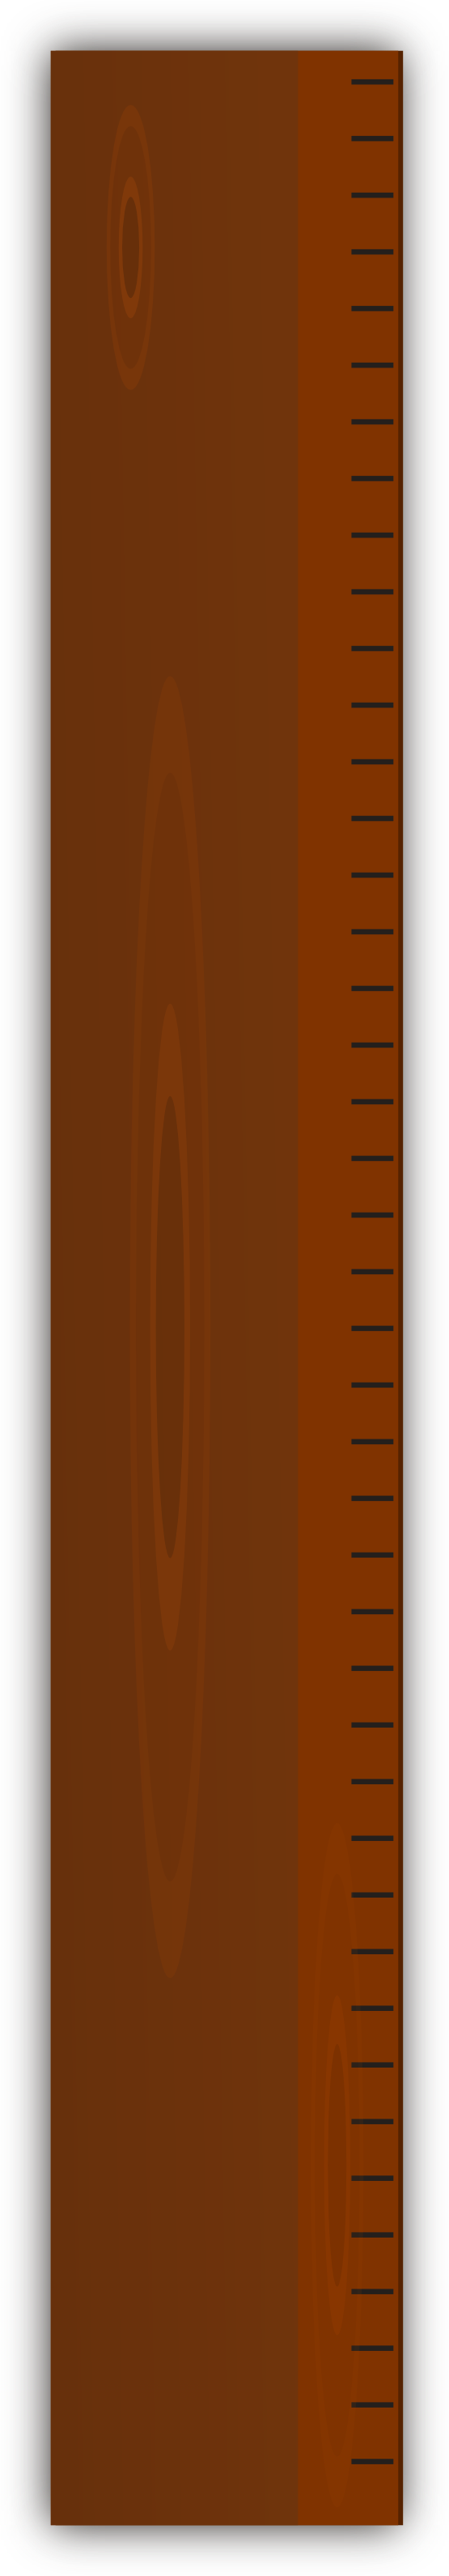 ruler clipart brown